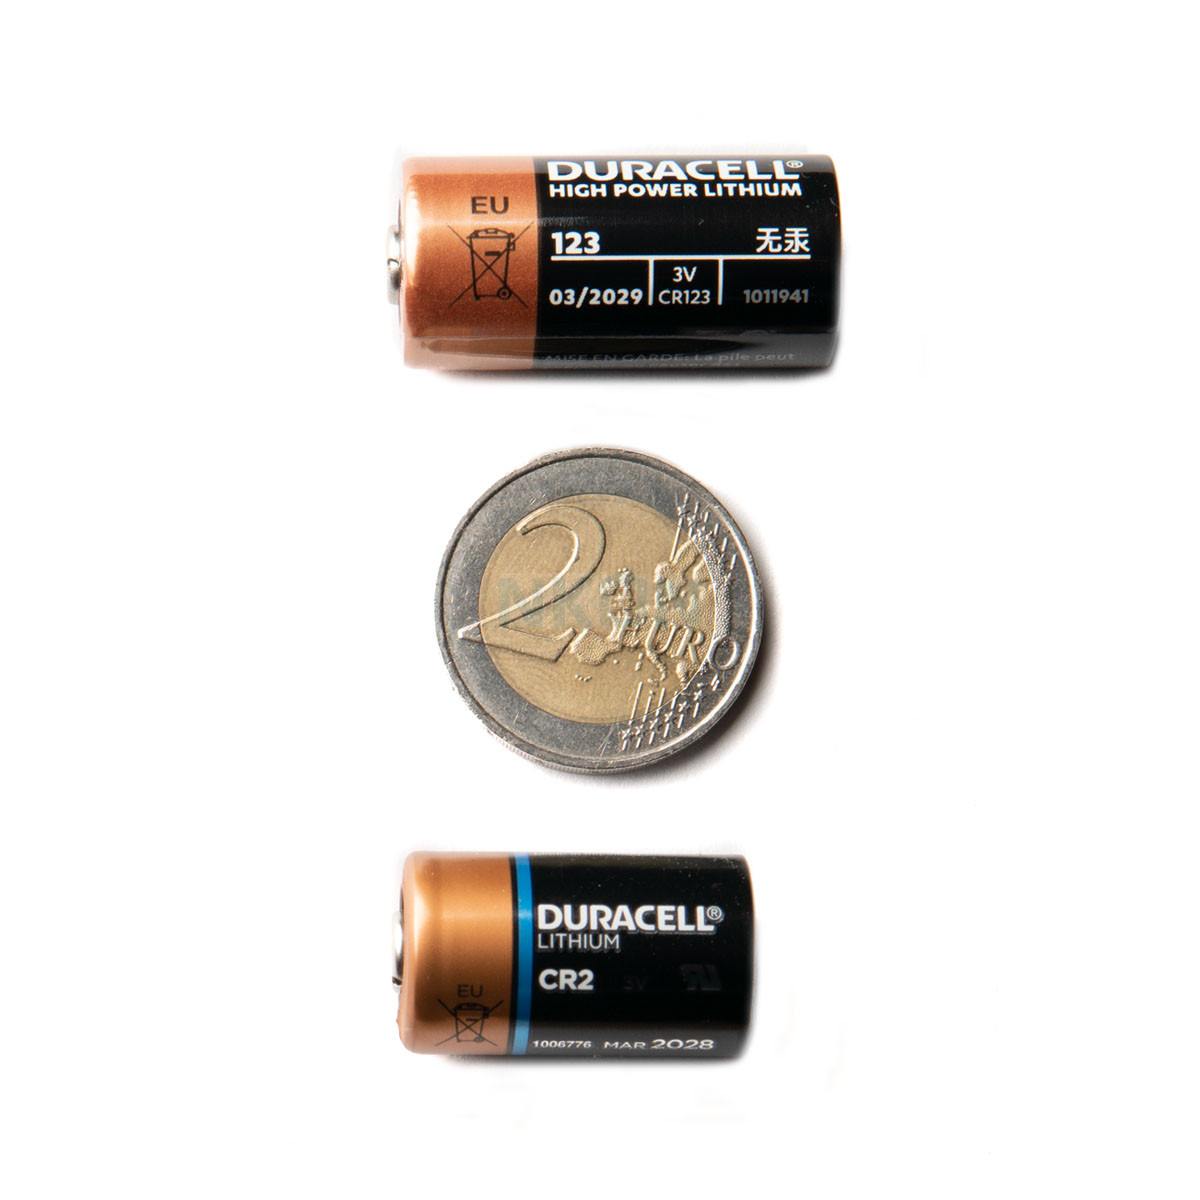 Duracell CR2 3 Volt Lithium Battery